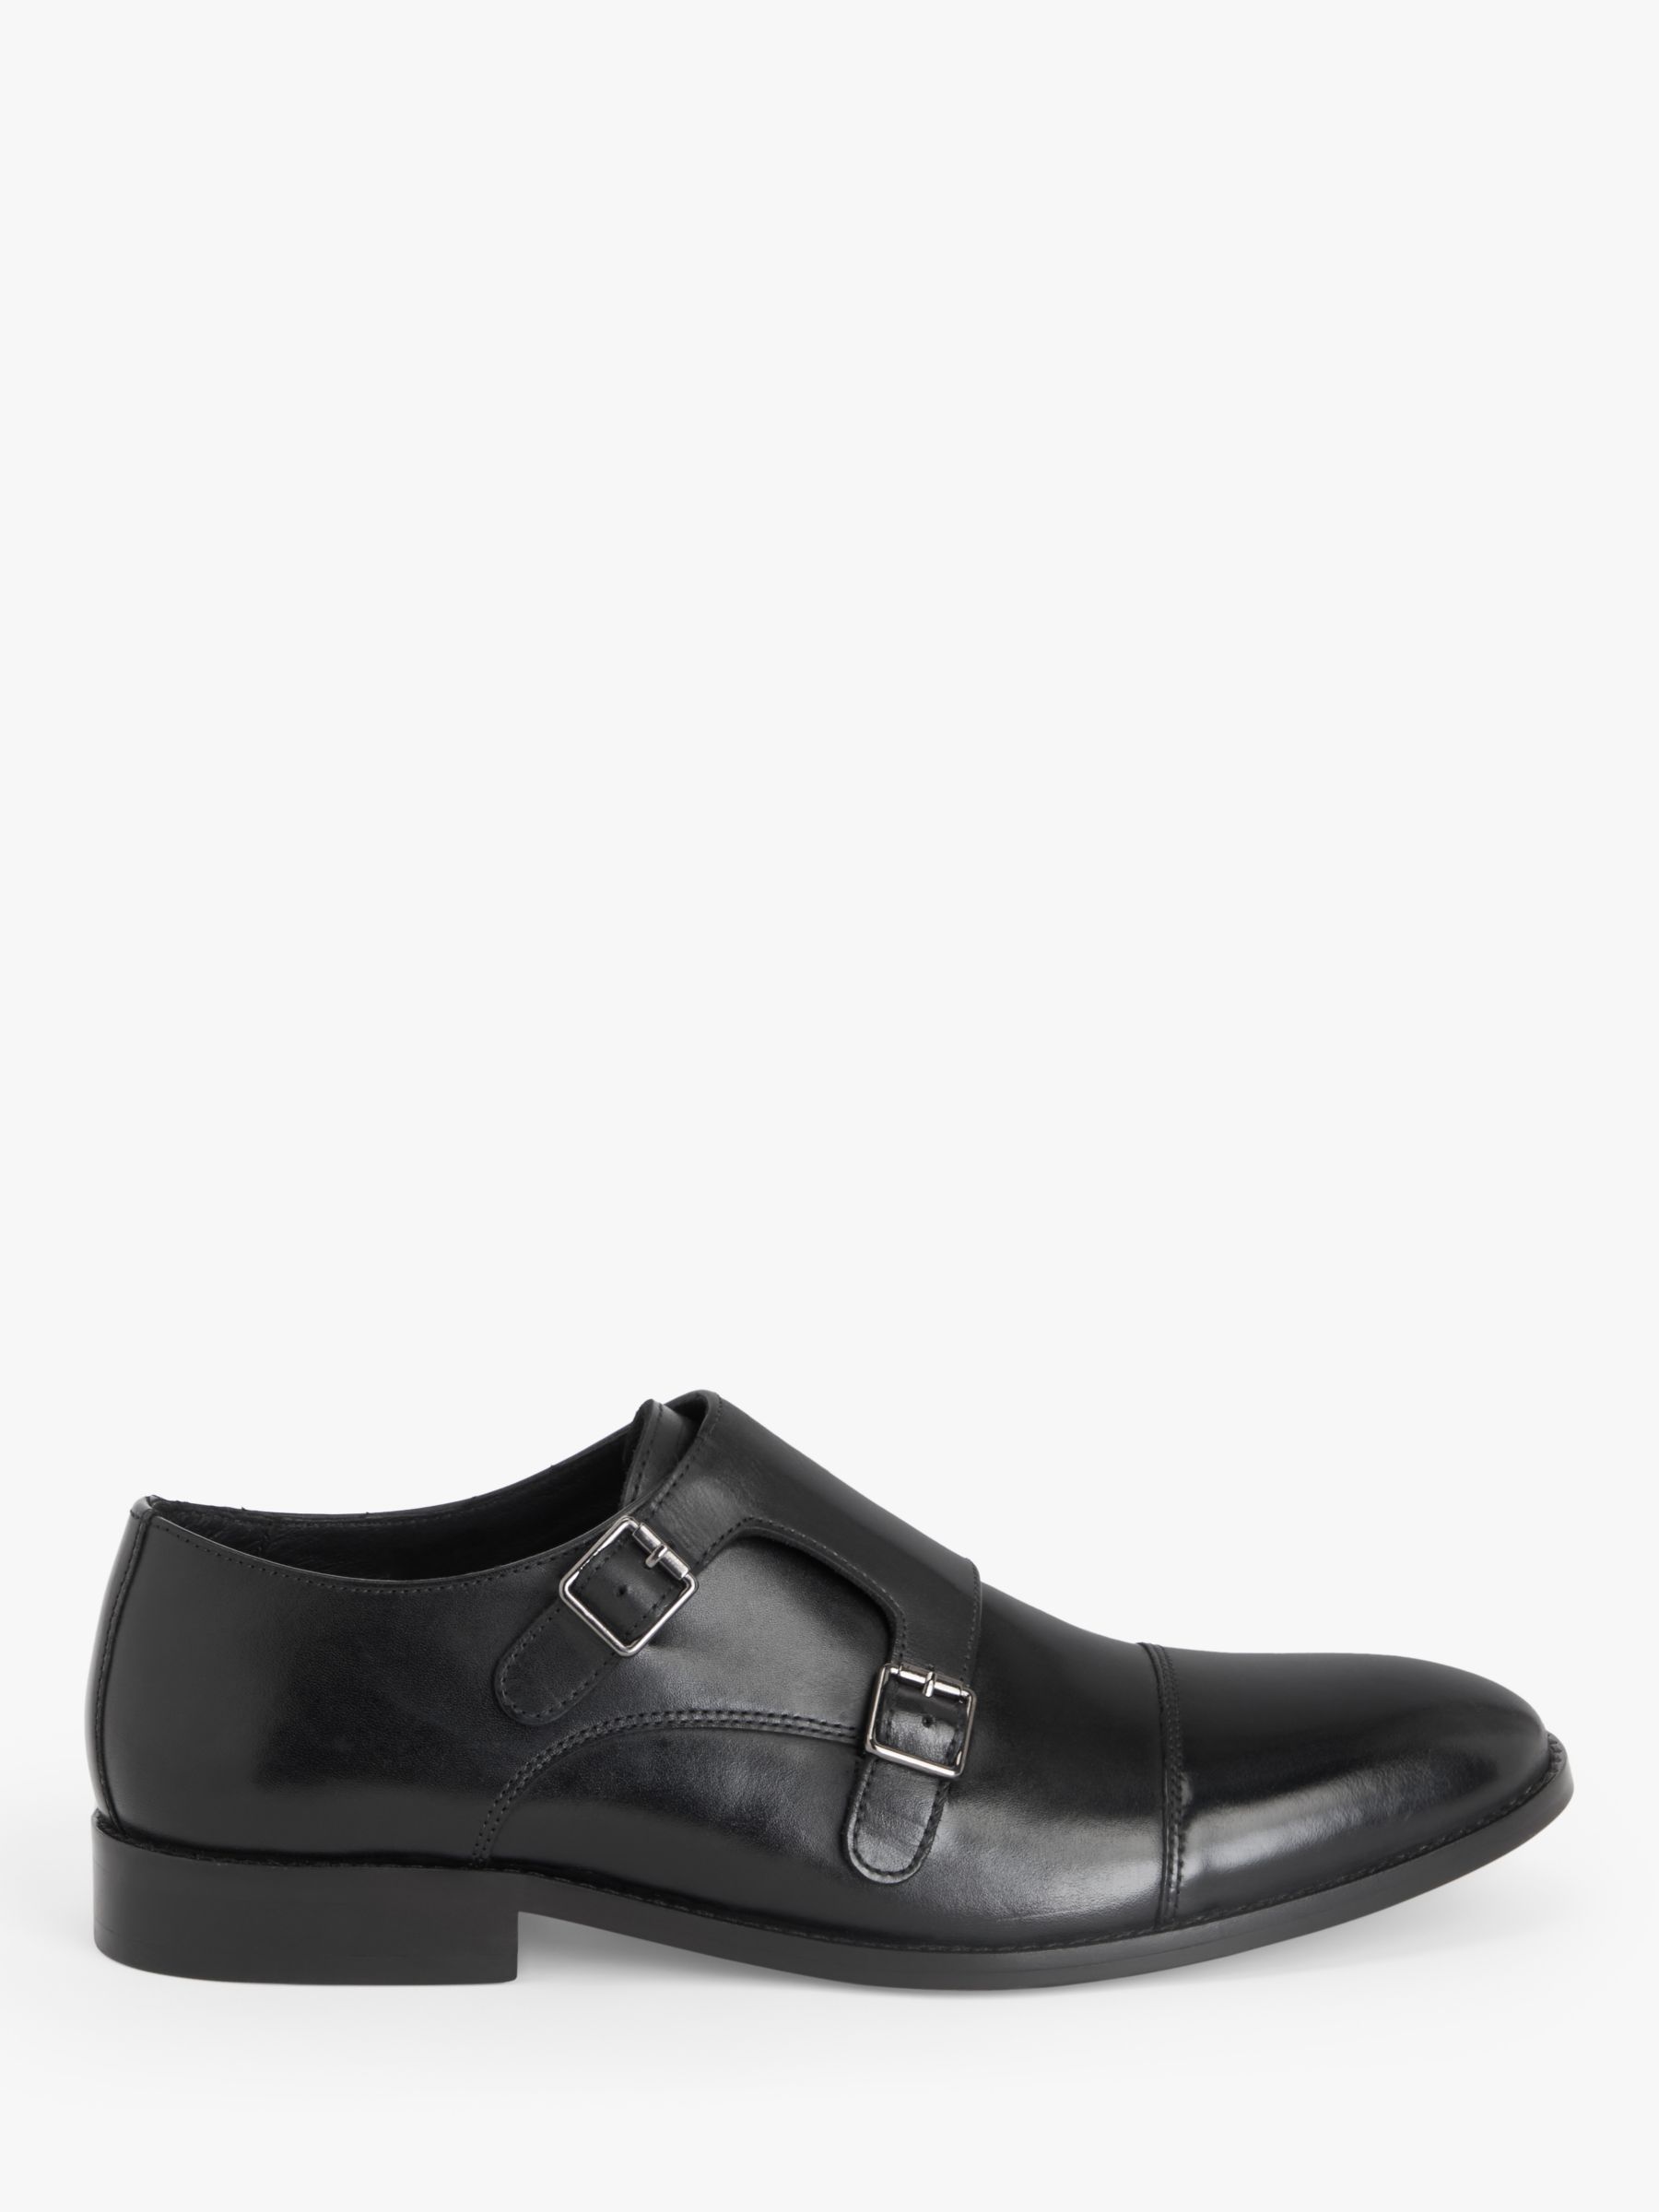 John Lewis Double Strap Leather Monk Shoes, Black at John Lewis & Partners